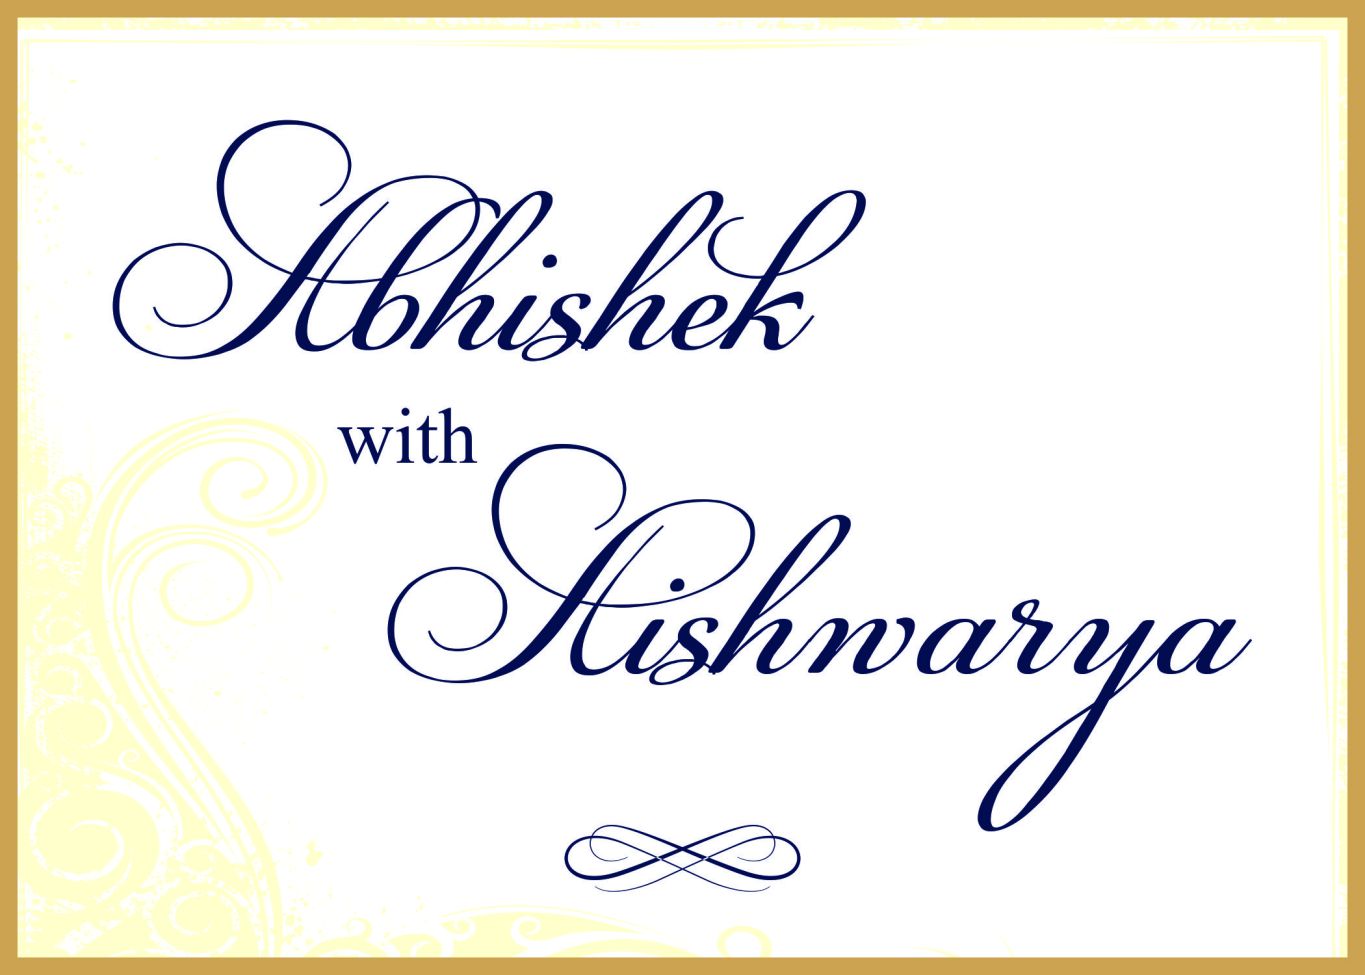 Abhishek and Aishwarya